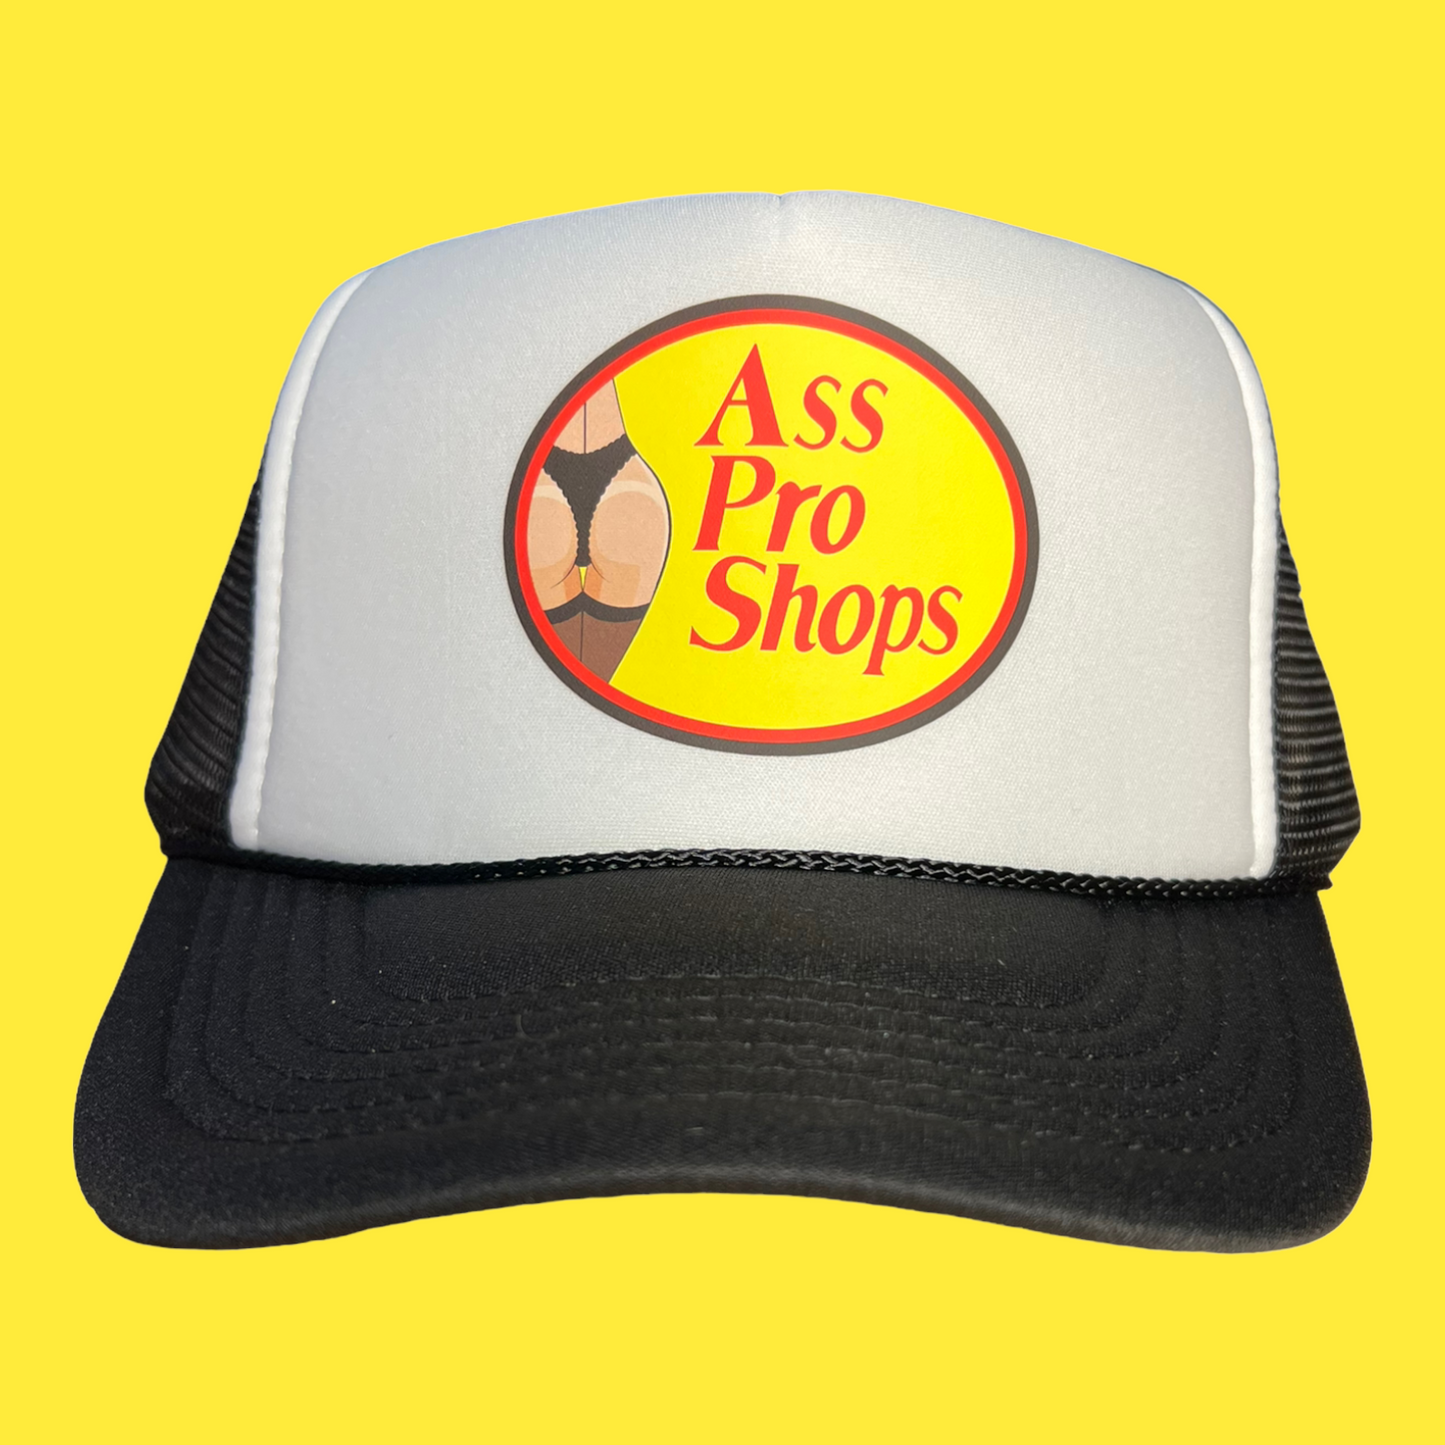 Ass Pro Shops Trucker Hat Funny Trucker Hat Black/White